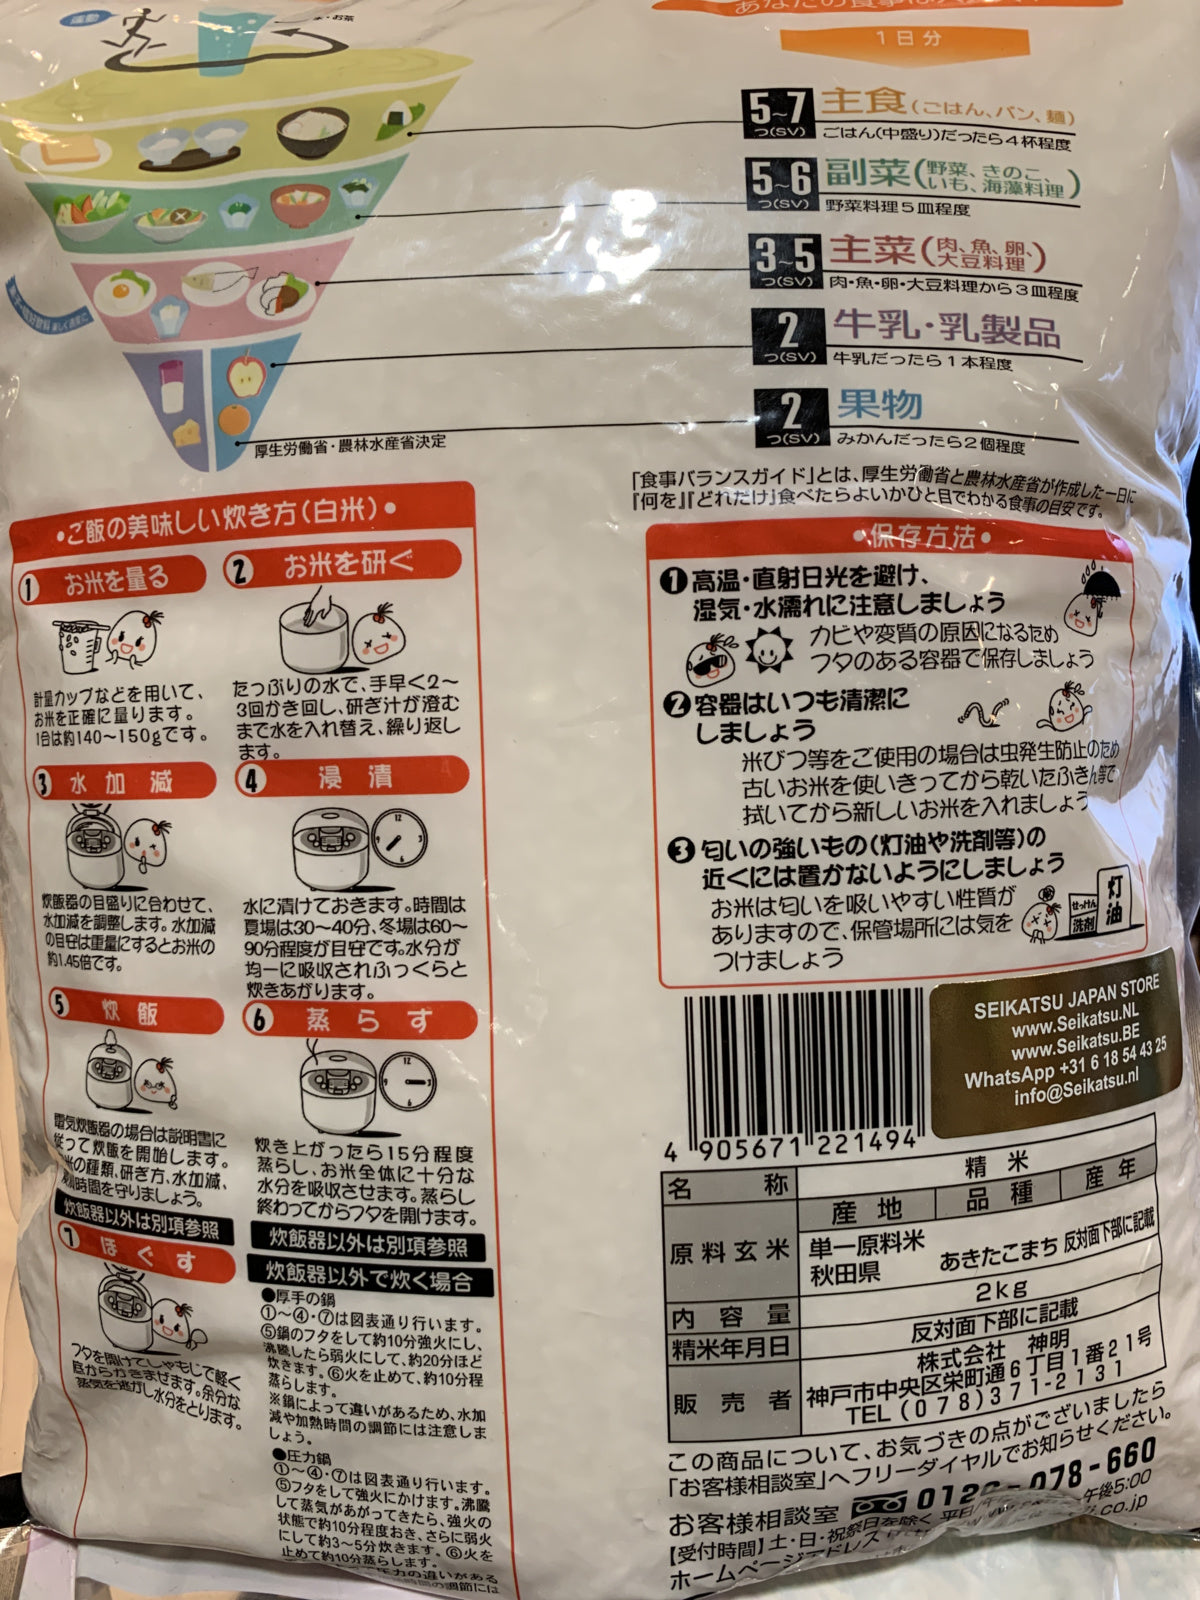 Shinmei Akafuji Akitakomachi Japanese Rice 2kg